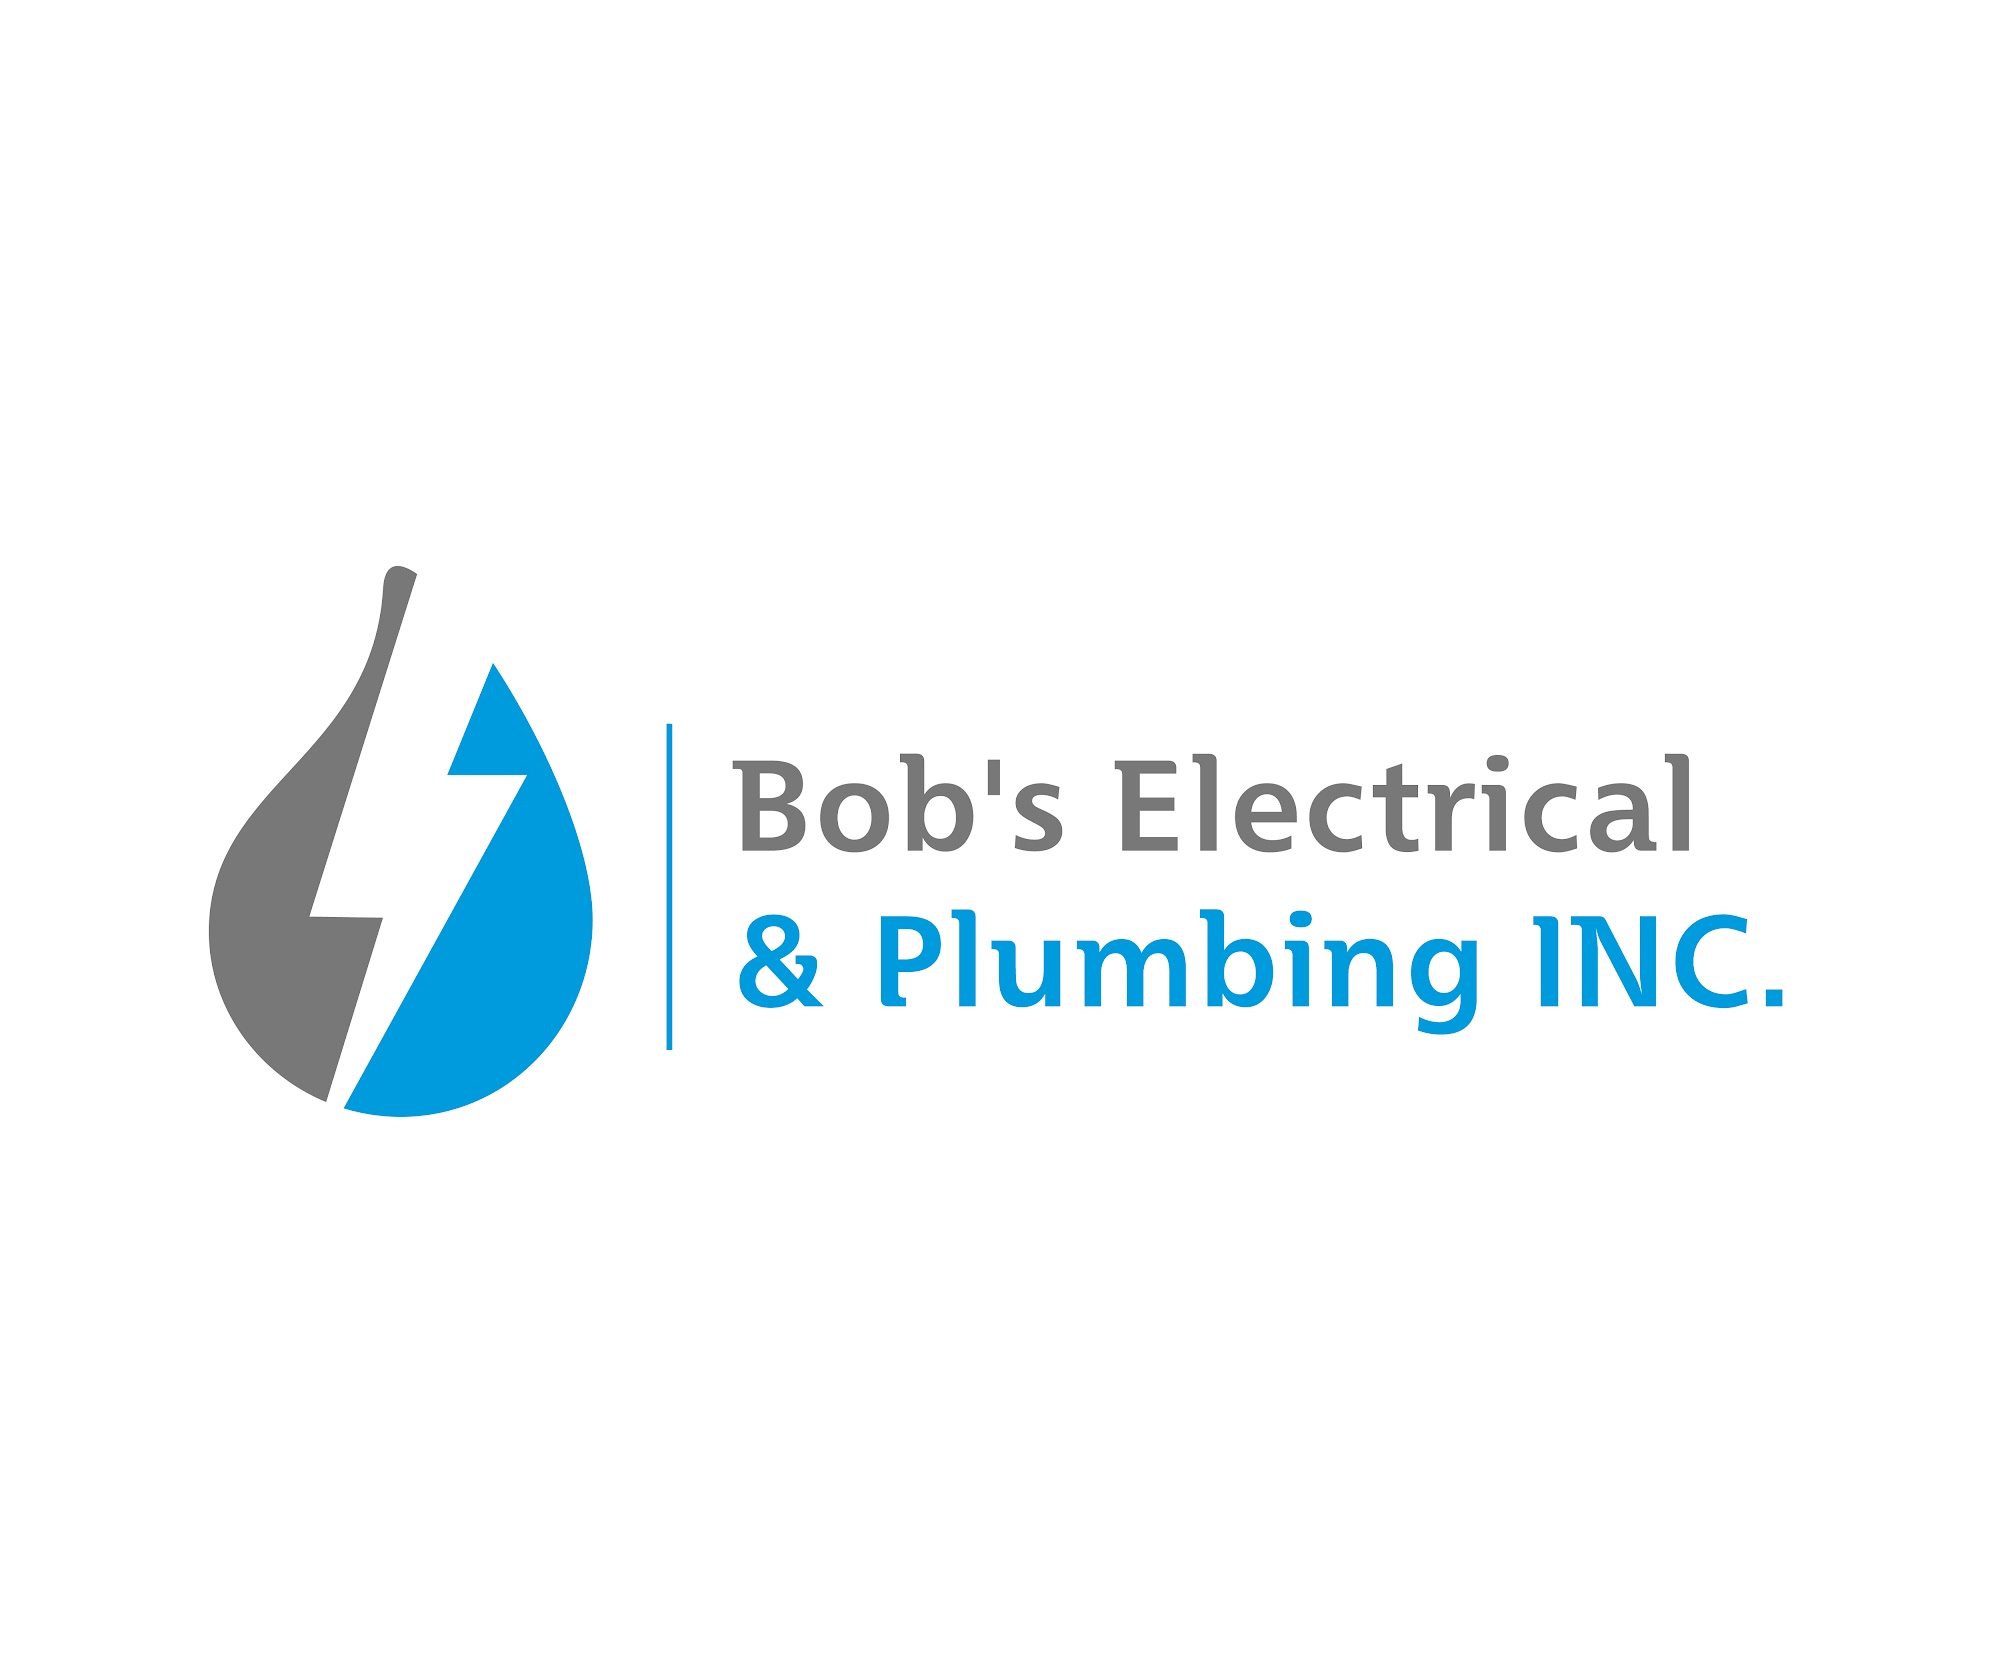 Bob's Electrical & Plumbing INC. 304 Railway Ave, Holgate Ohio 43527